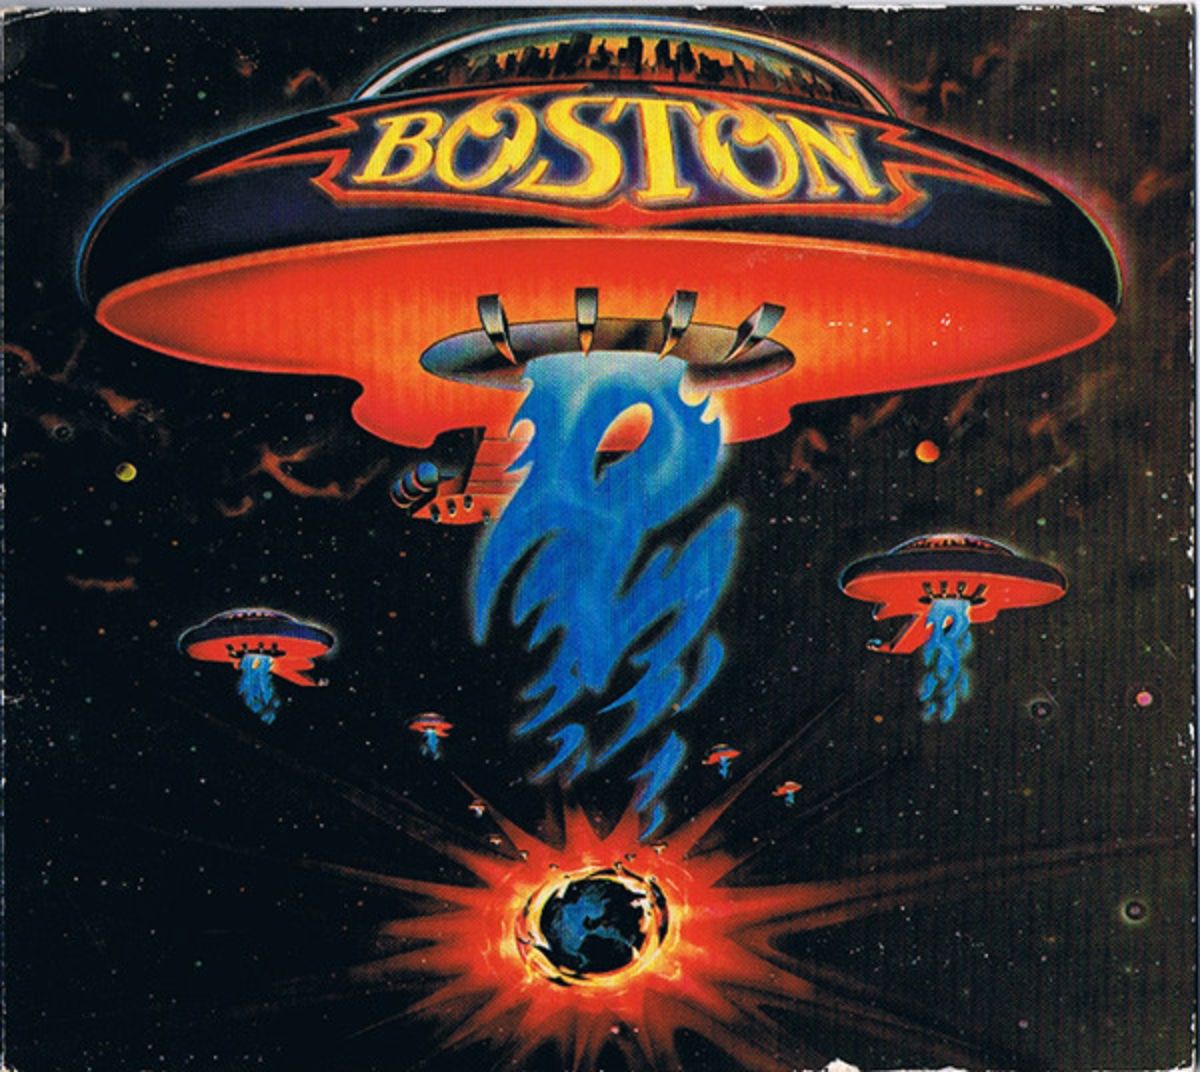 Álbum boston (1976)